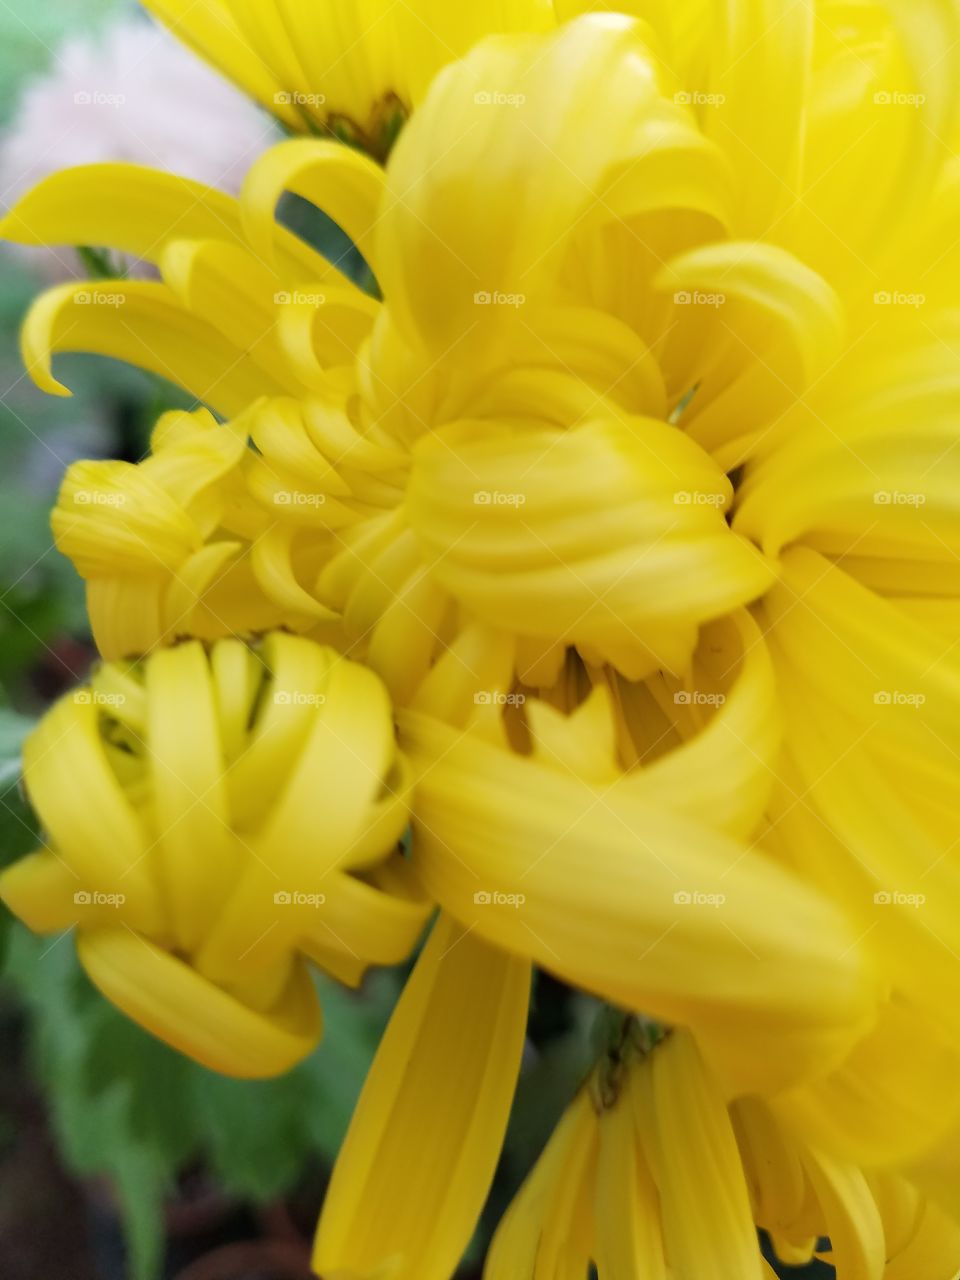 twisted pedal chrysanthemum